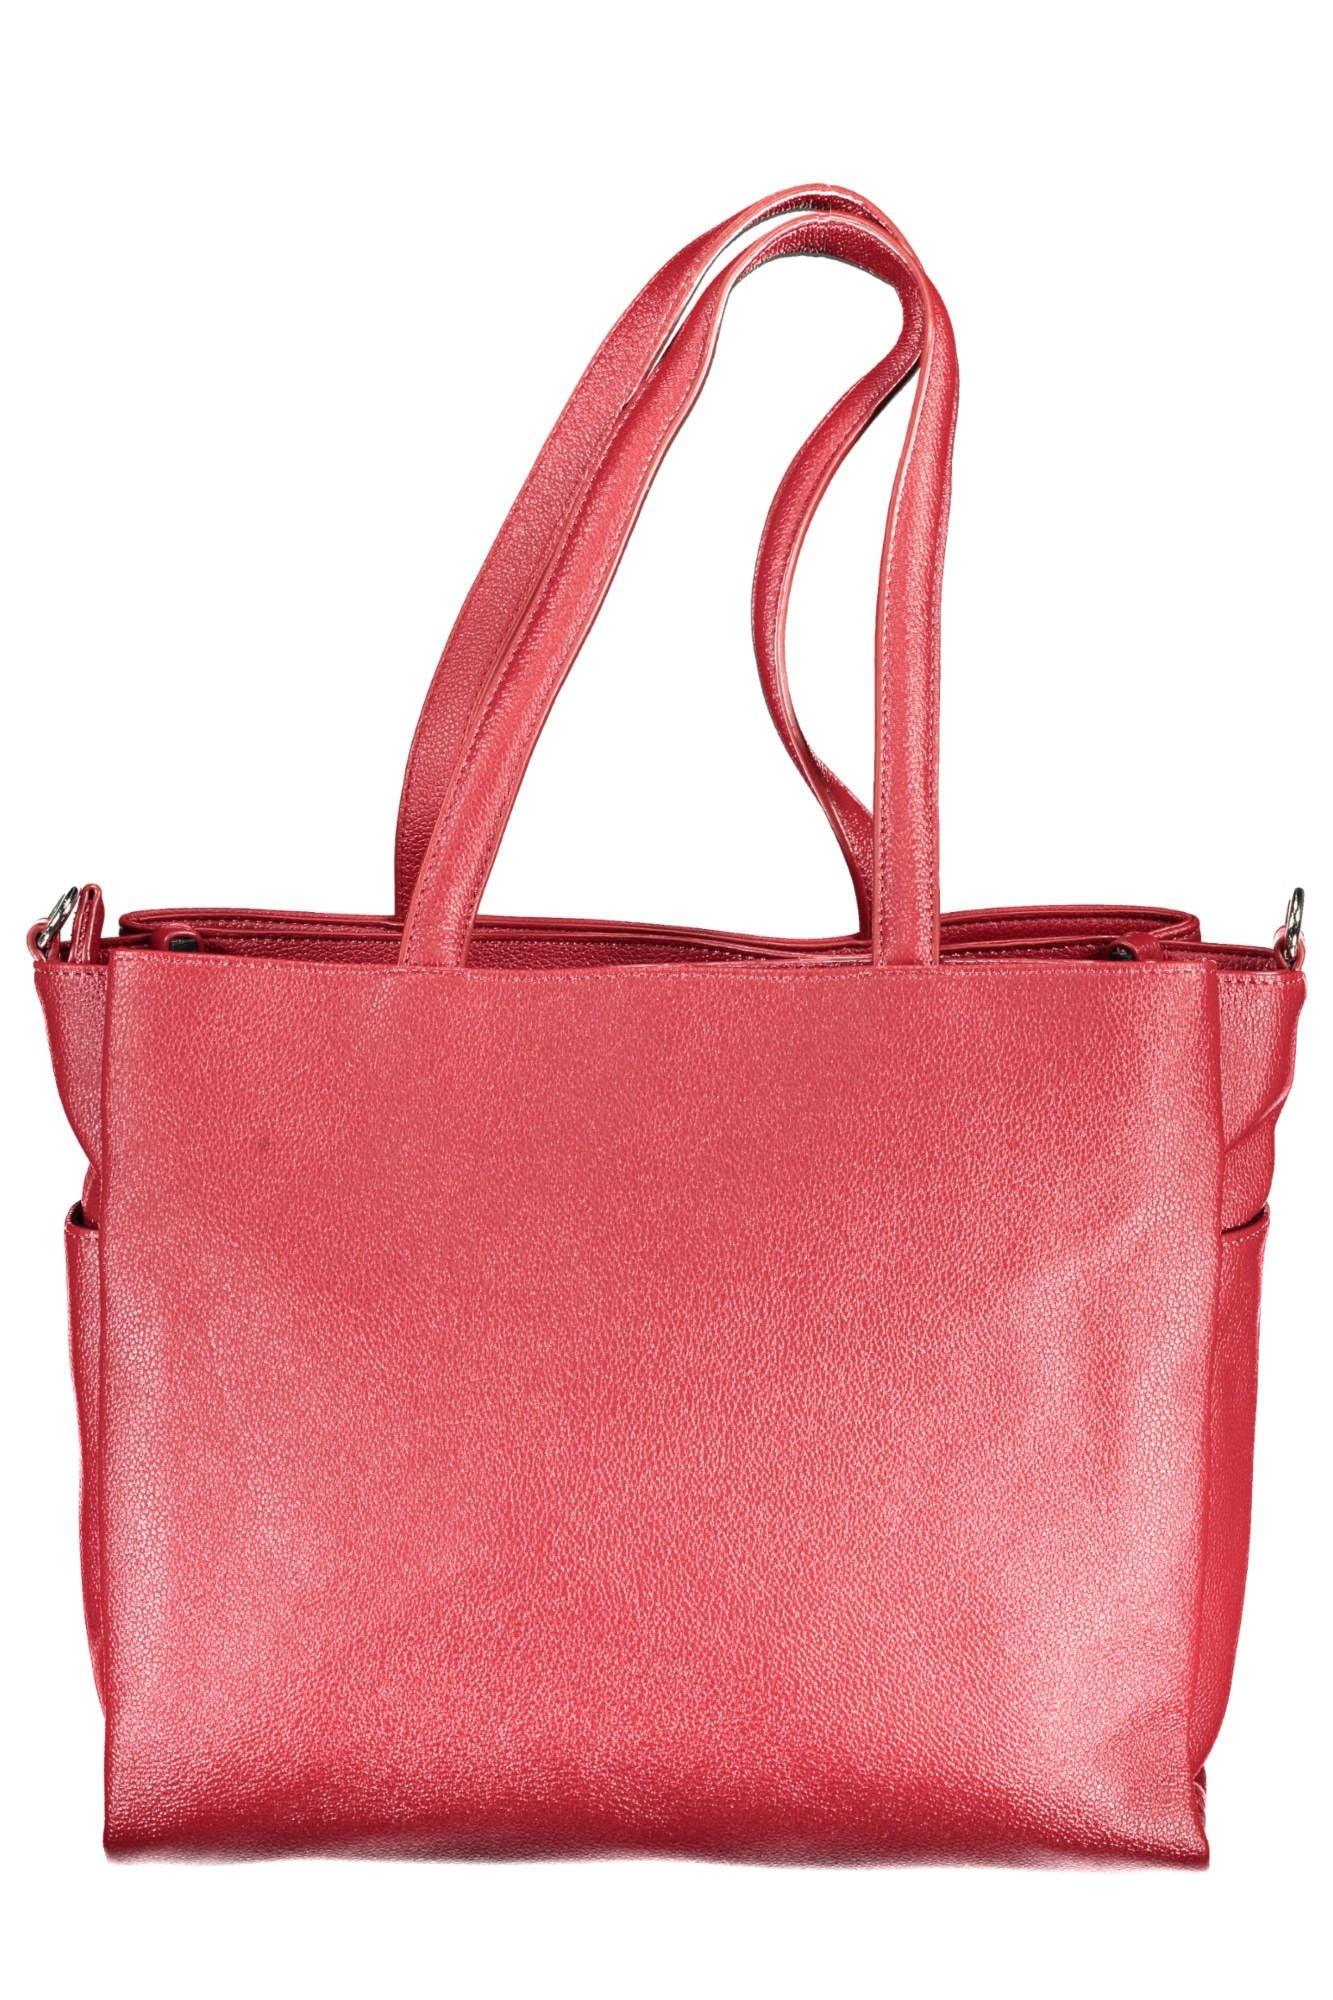 BYBLOS Chic Red Convertible Shoulder Bag - PER.FASHION